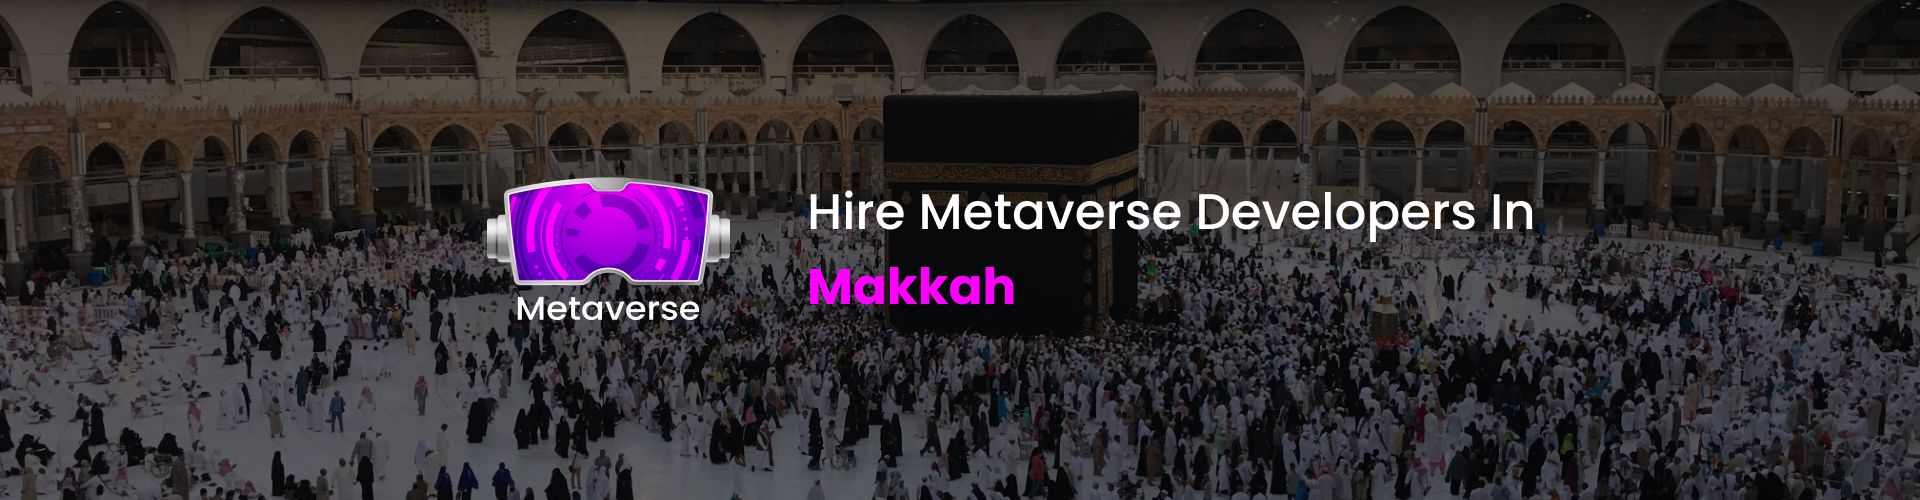 metaverse developers in makkah